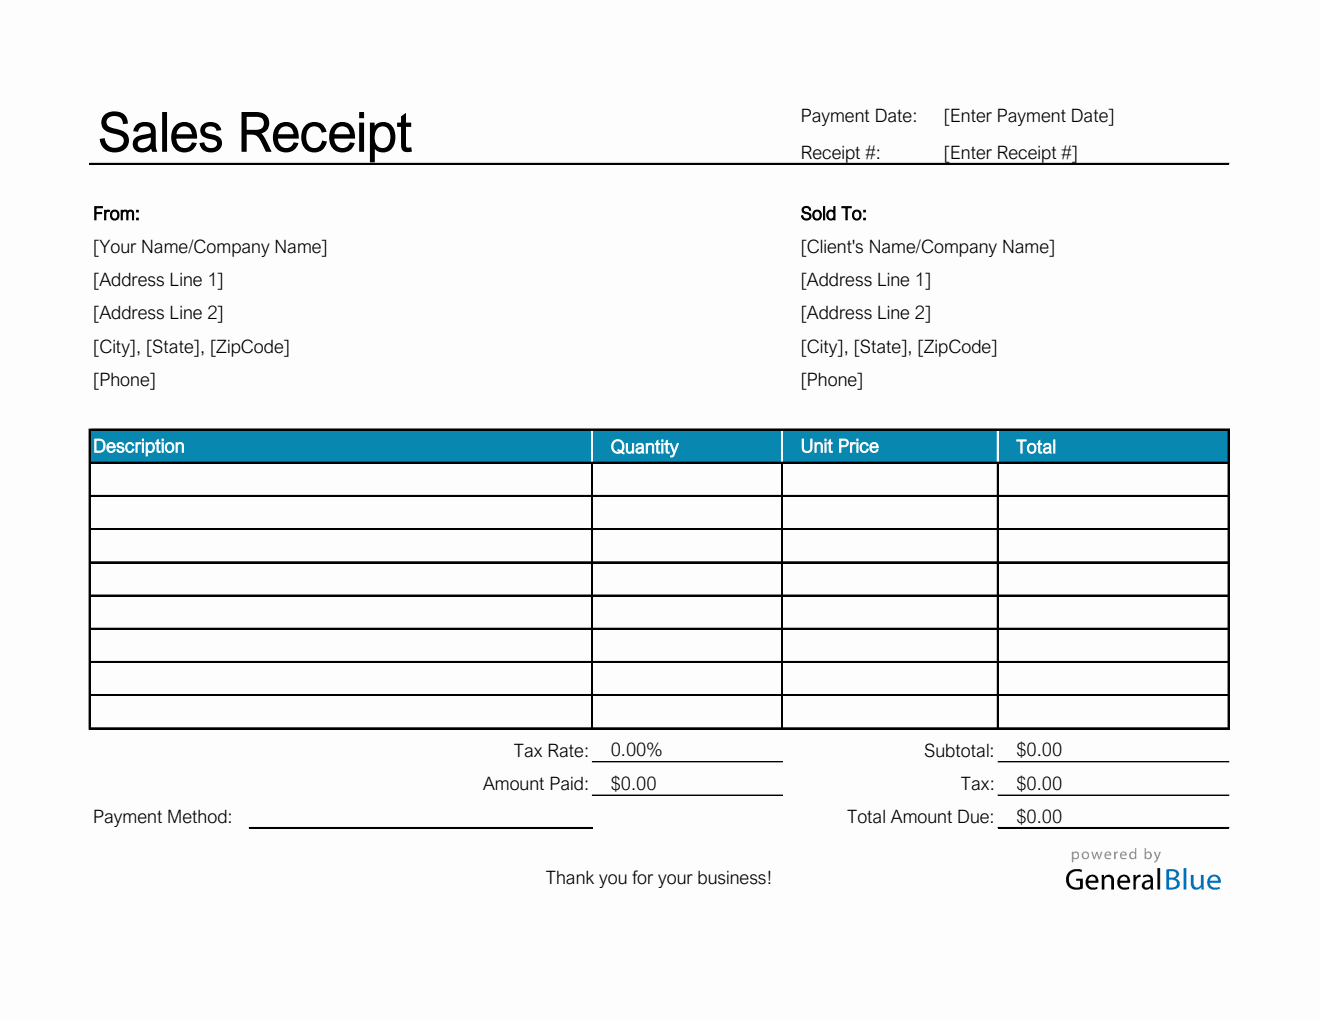 Sales Receipt Template in Excel (Simple)